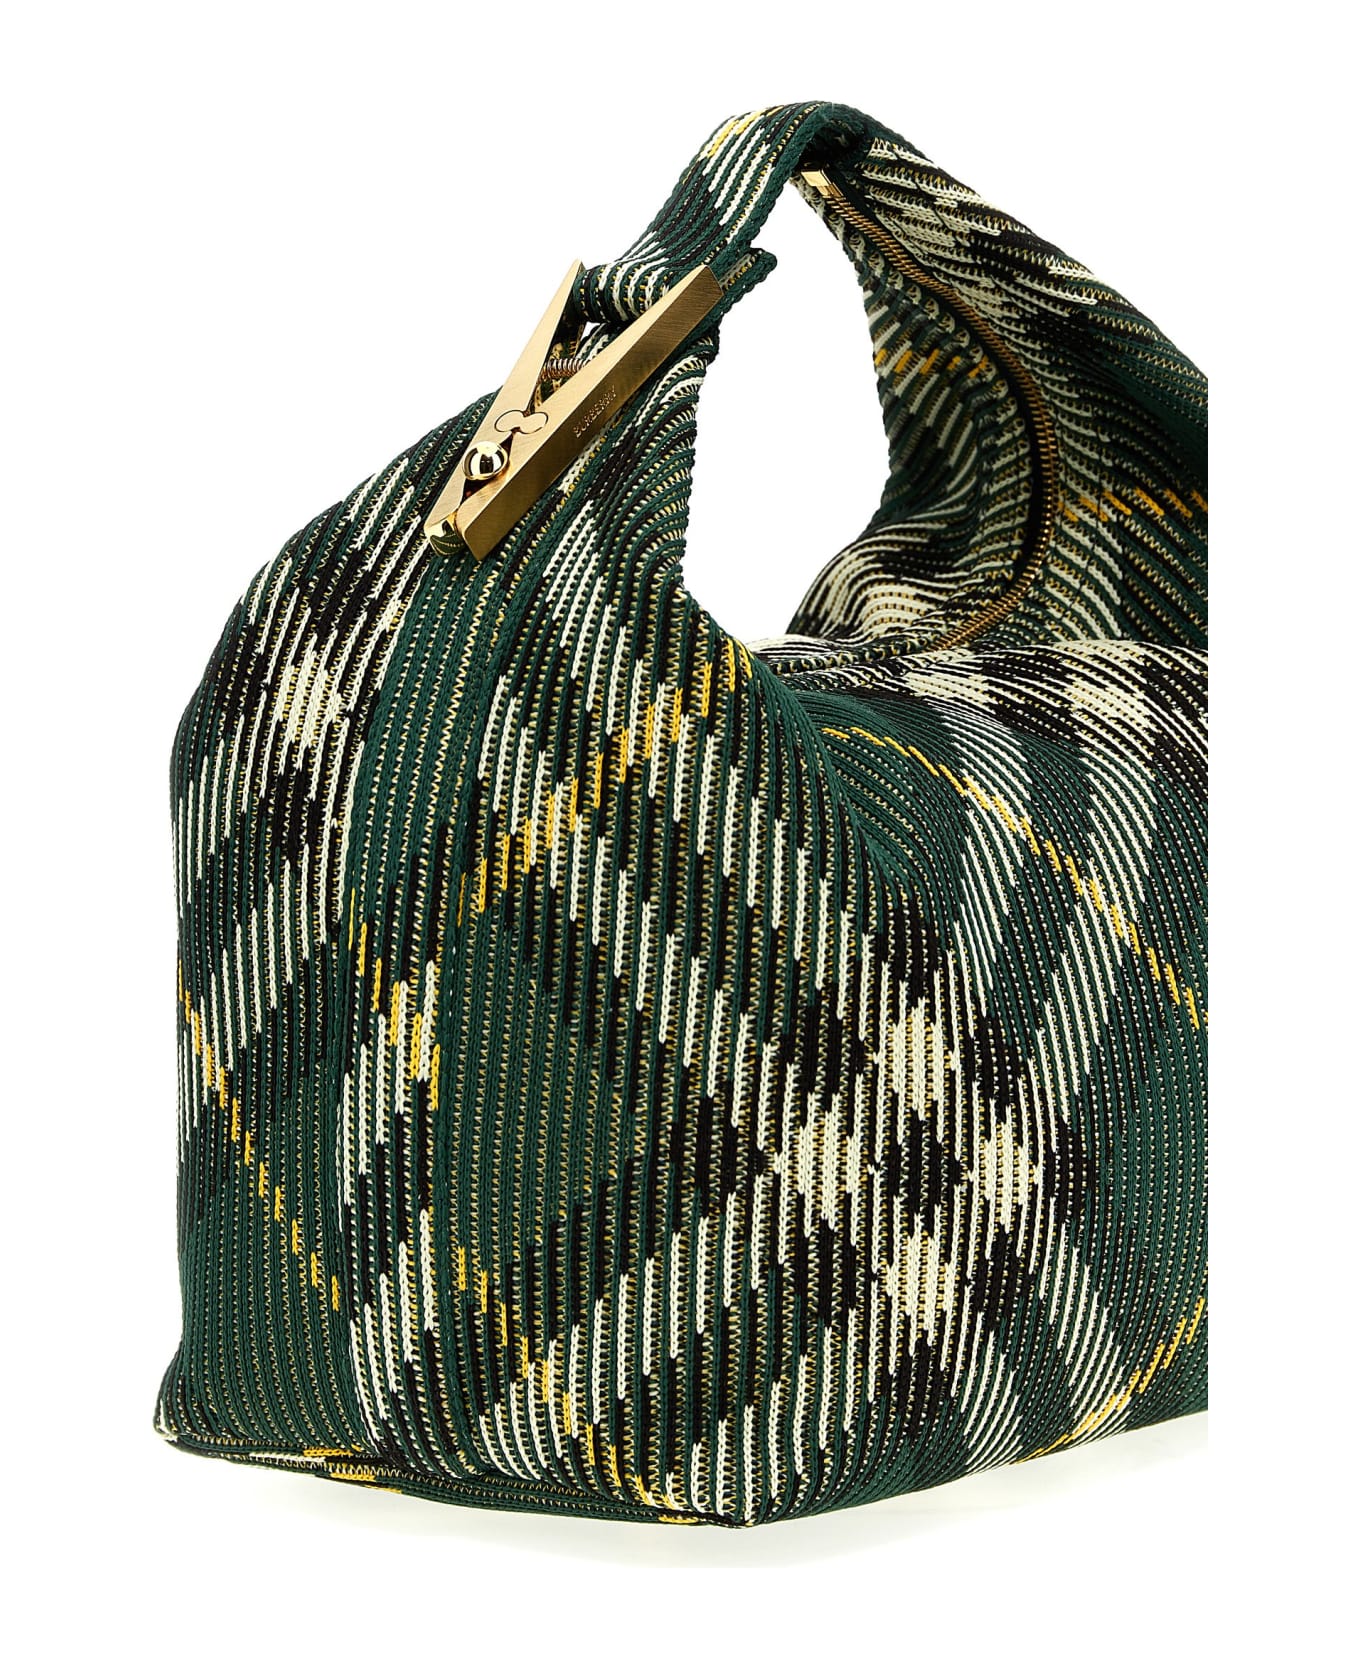 Burberry 'peg' Midi Handbag - Green